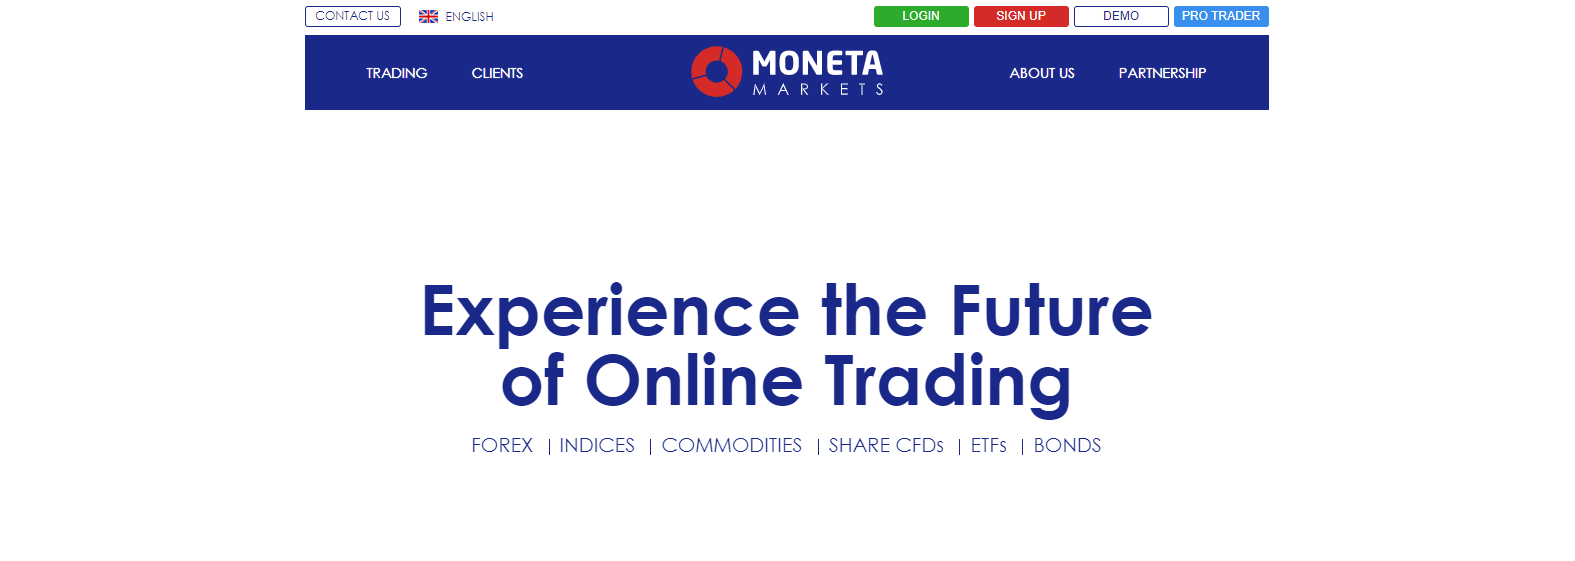 The official website of Moneta Markets